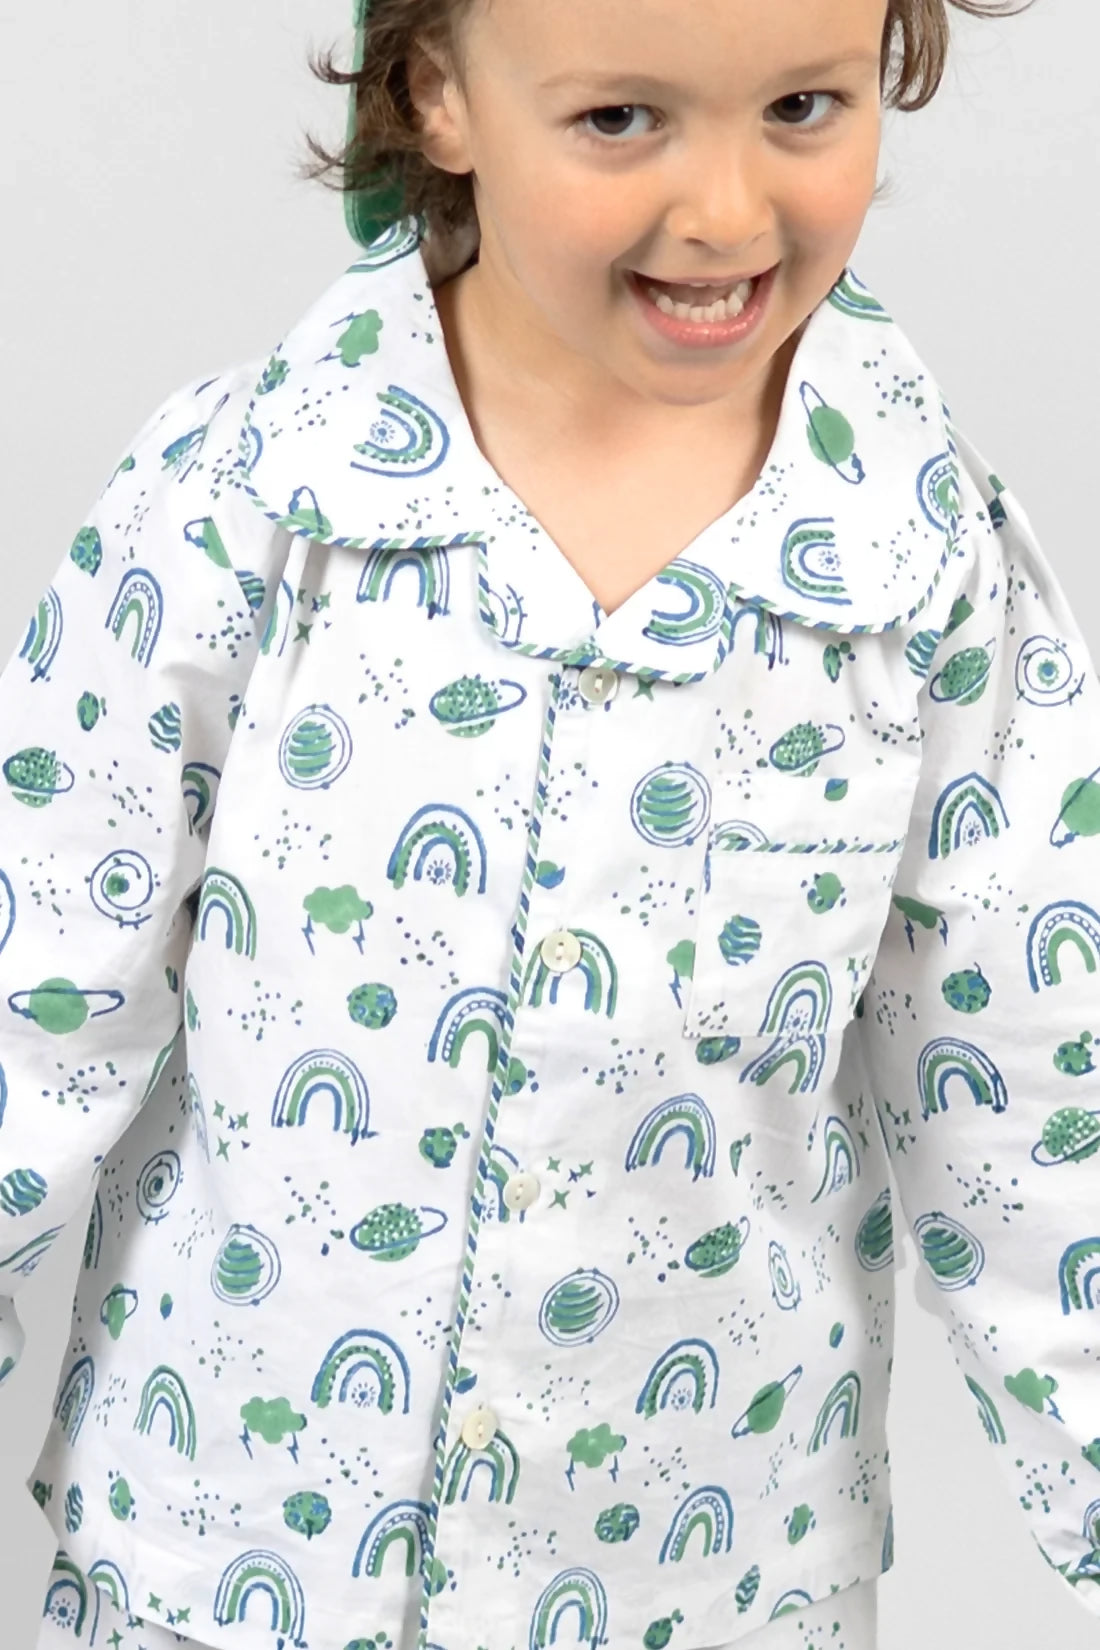 Interstellar Hide-and-Seek - Organic Cotton Pyjamas